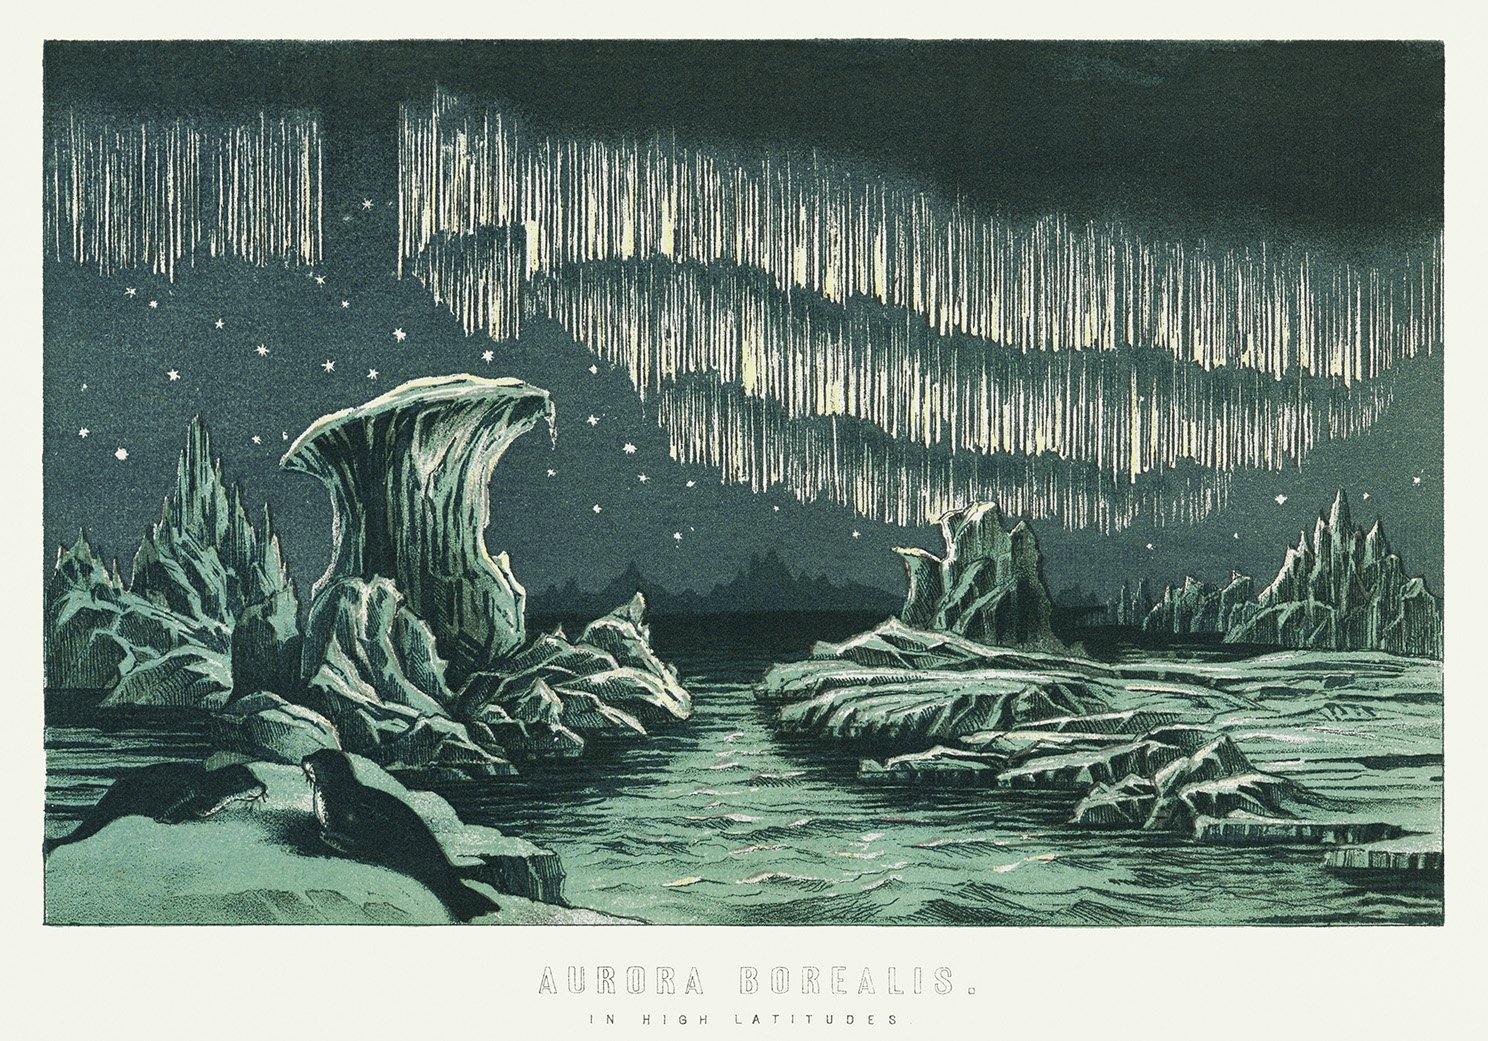 AURORA BOREALIS PRINT: Vintage Northern Lights Illustration - Pimlico Prints